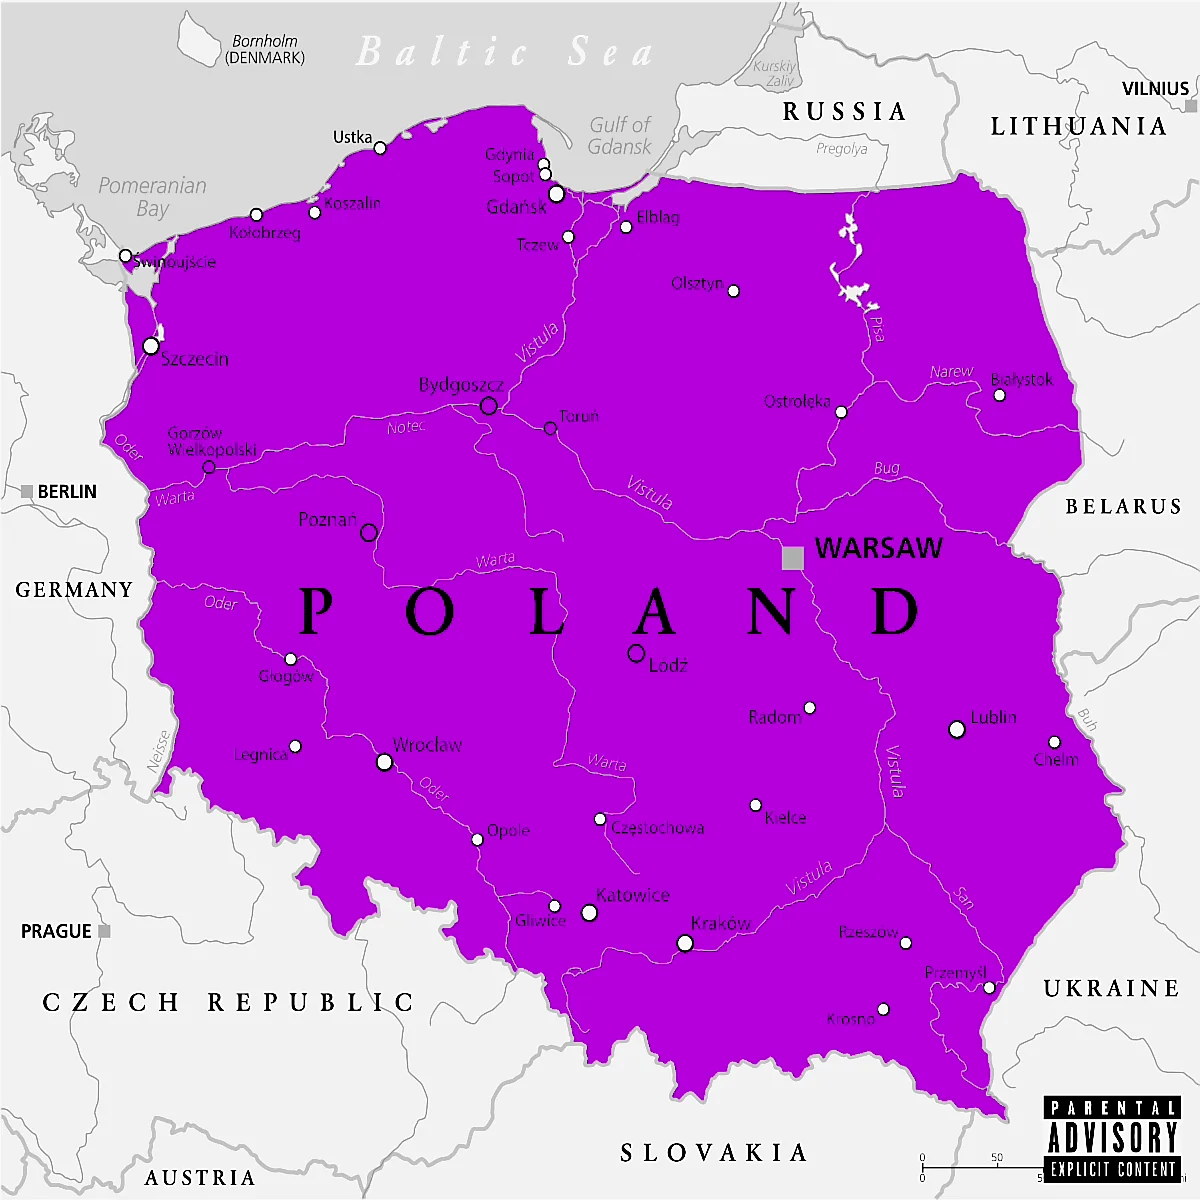 Lil Yachty releases Poland via 360 MAGAZINE.